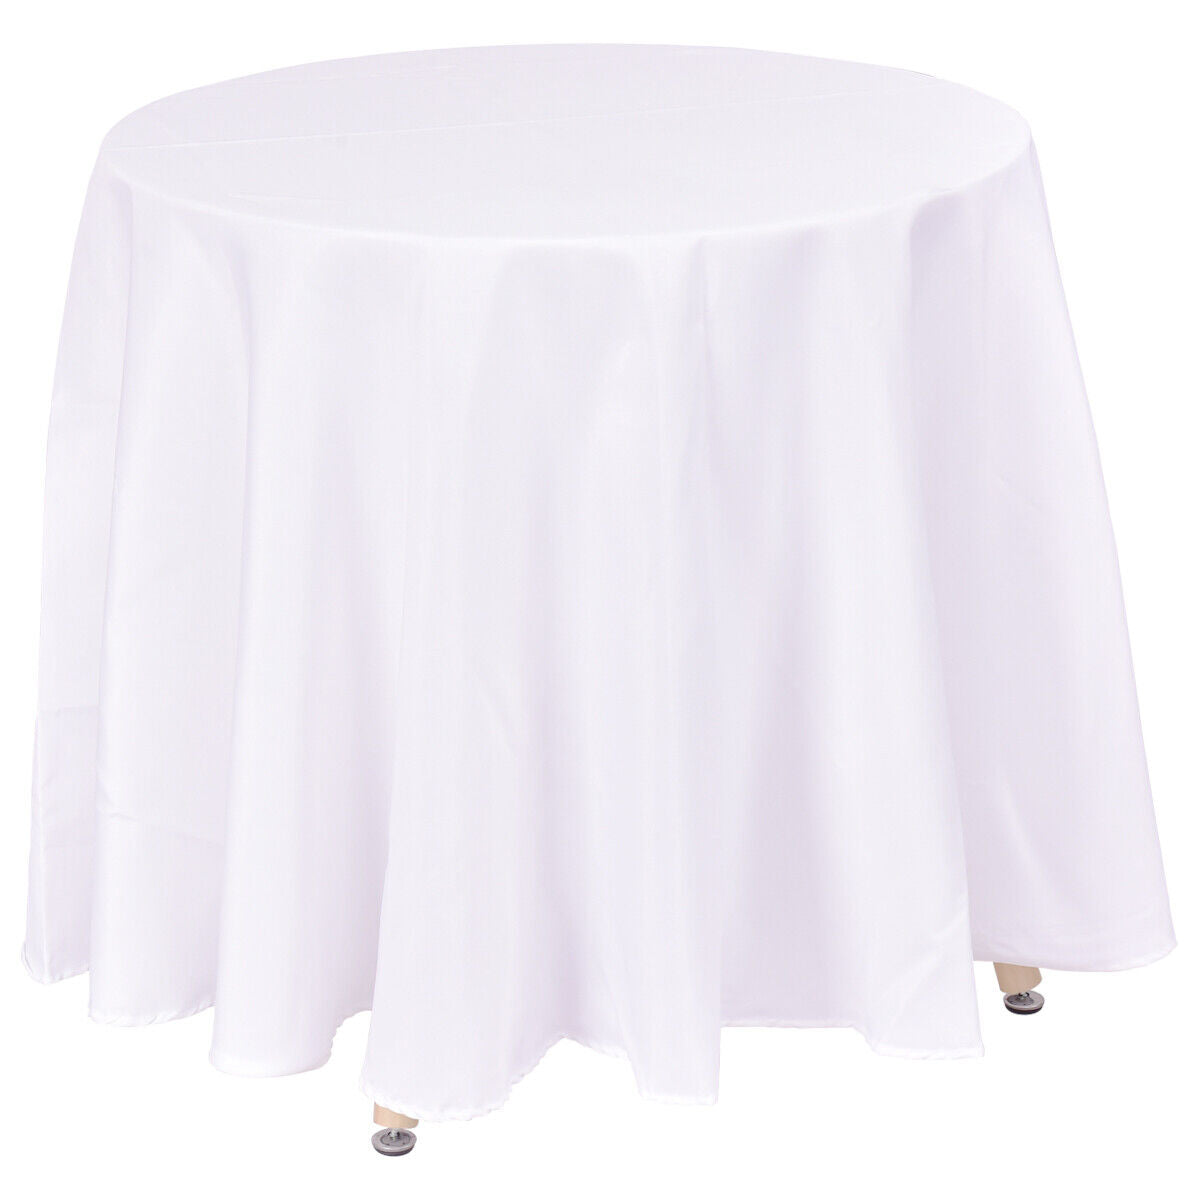 10 Pcs White Tablecloth Premium Table Round Cover Wedding Banquet 230 cm Party